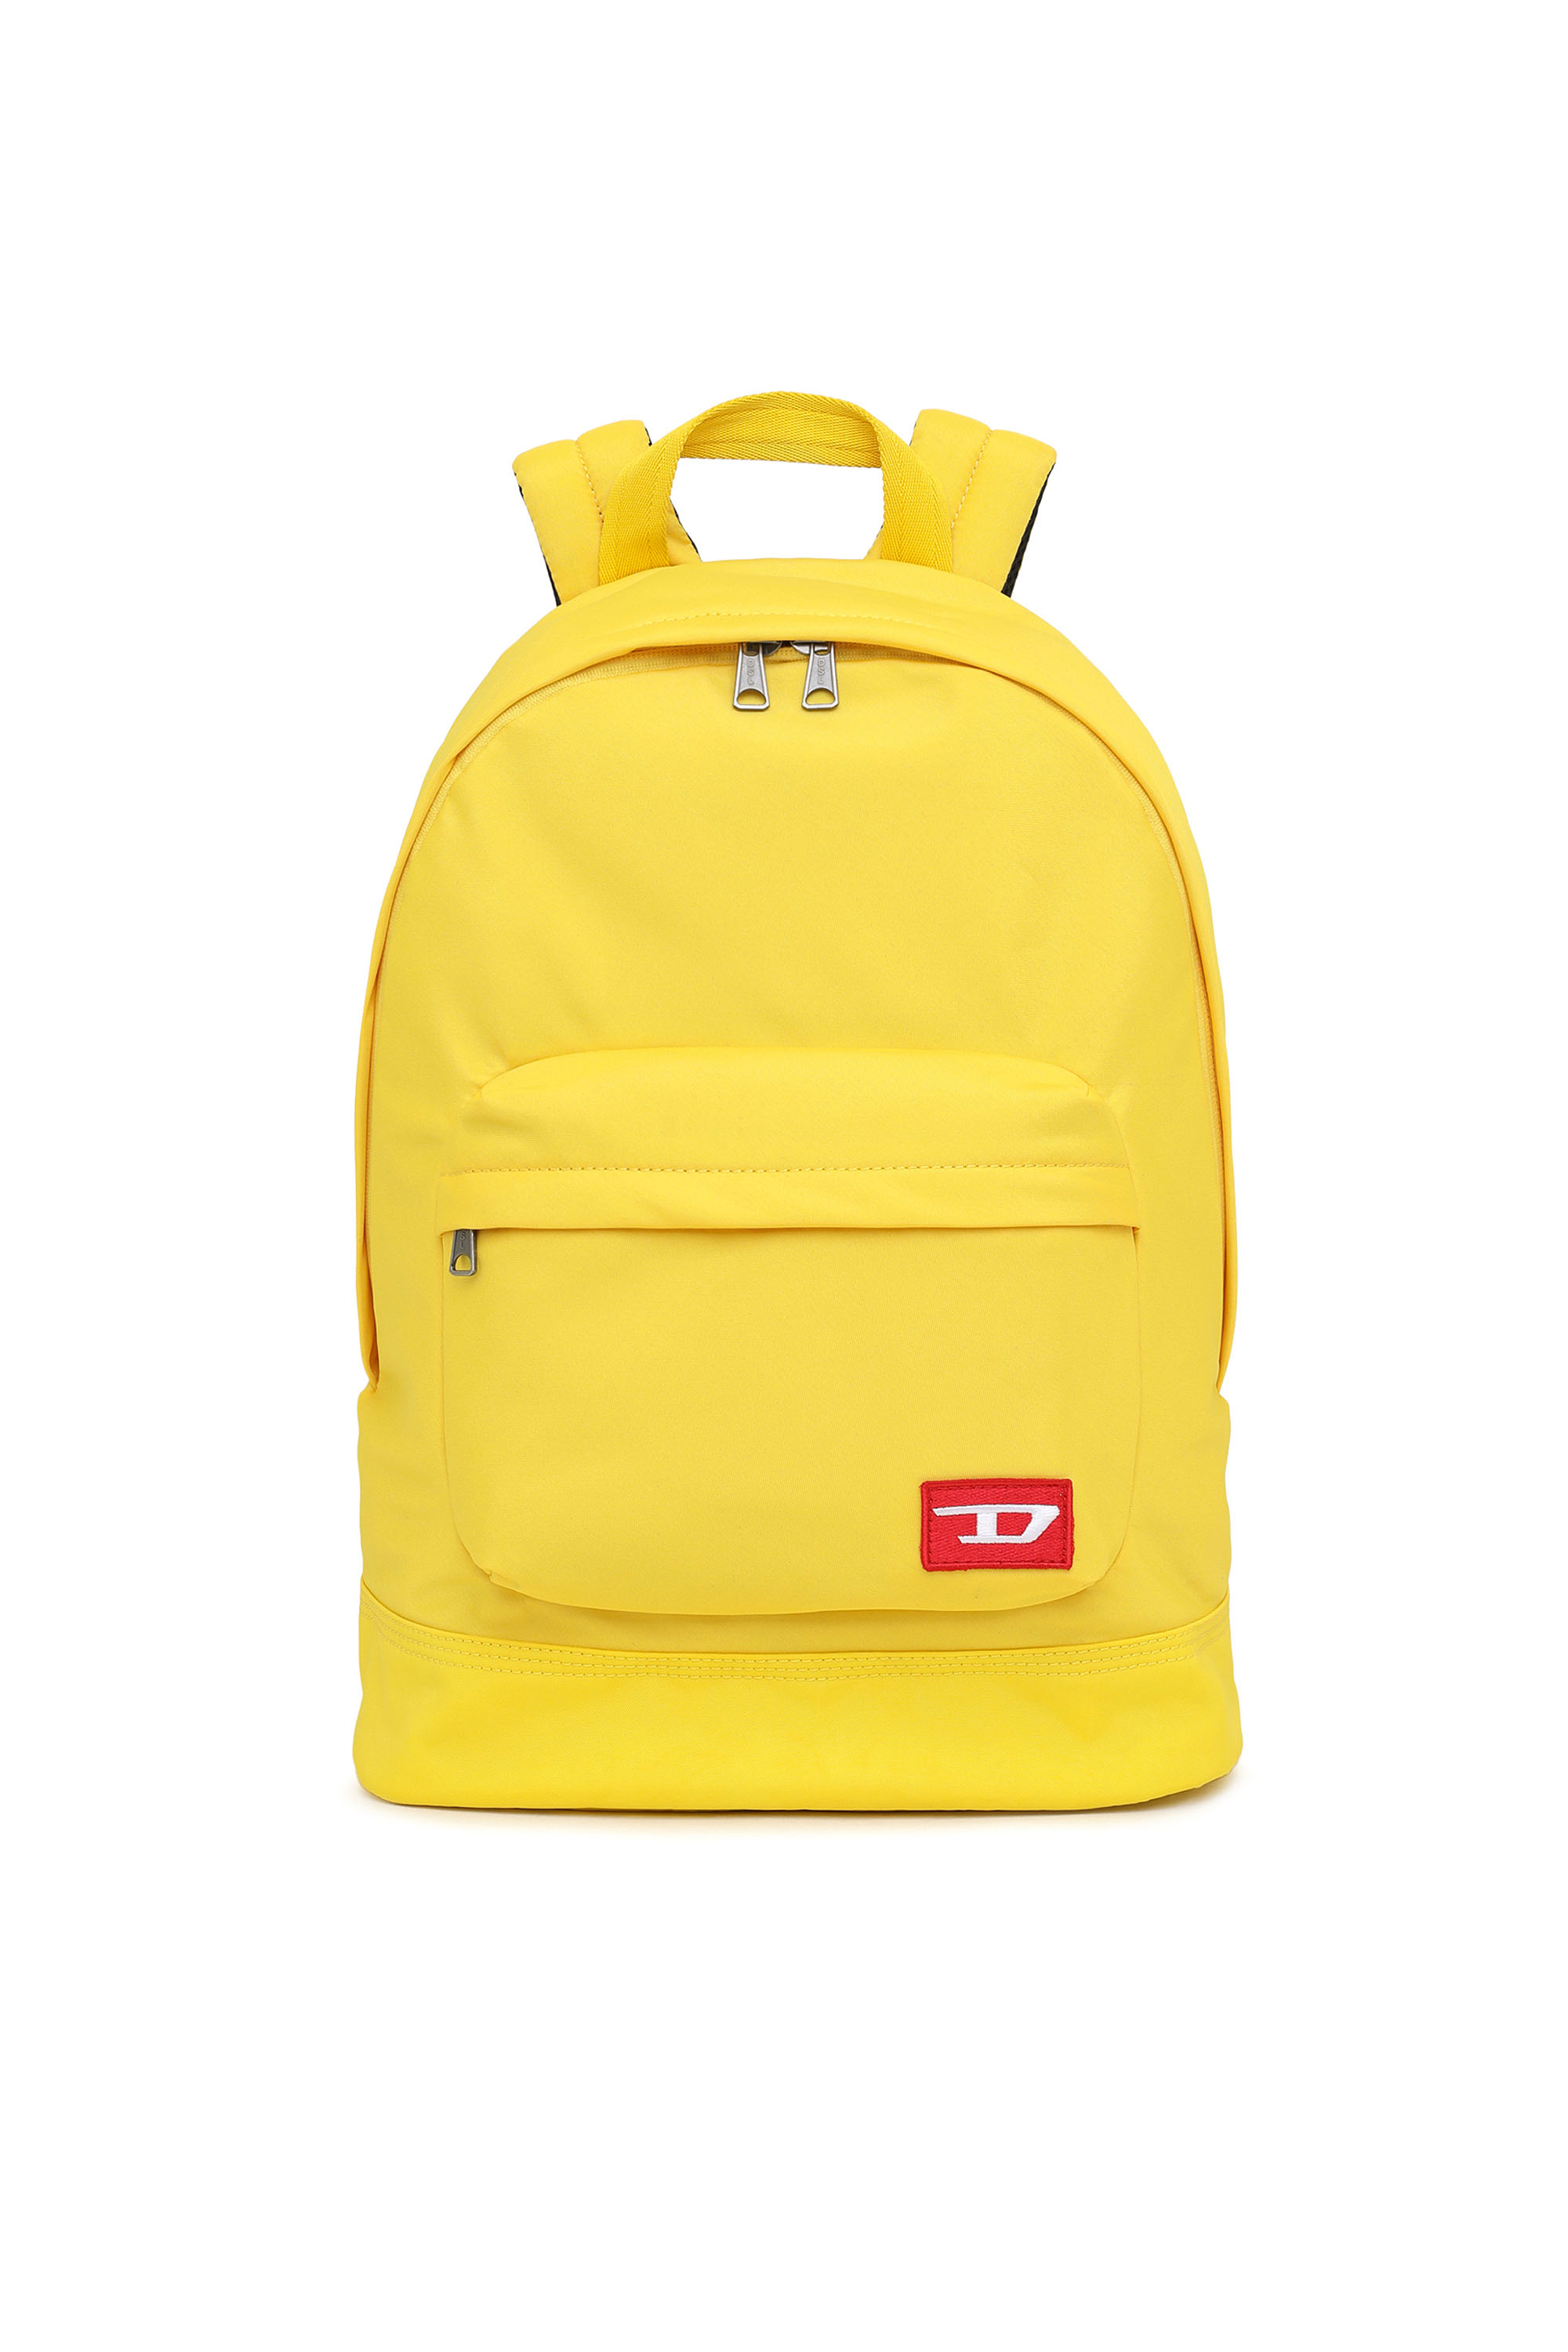 FARB, Yellow - Backpacks